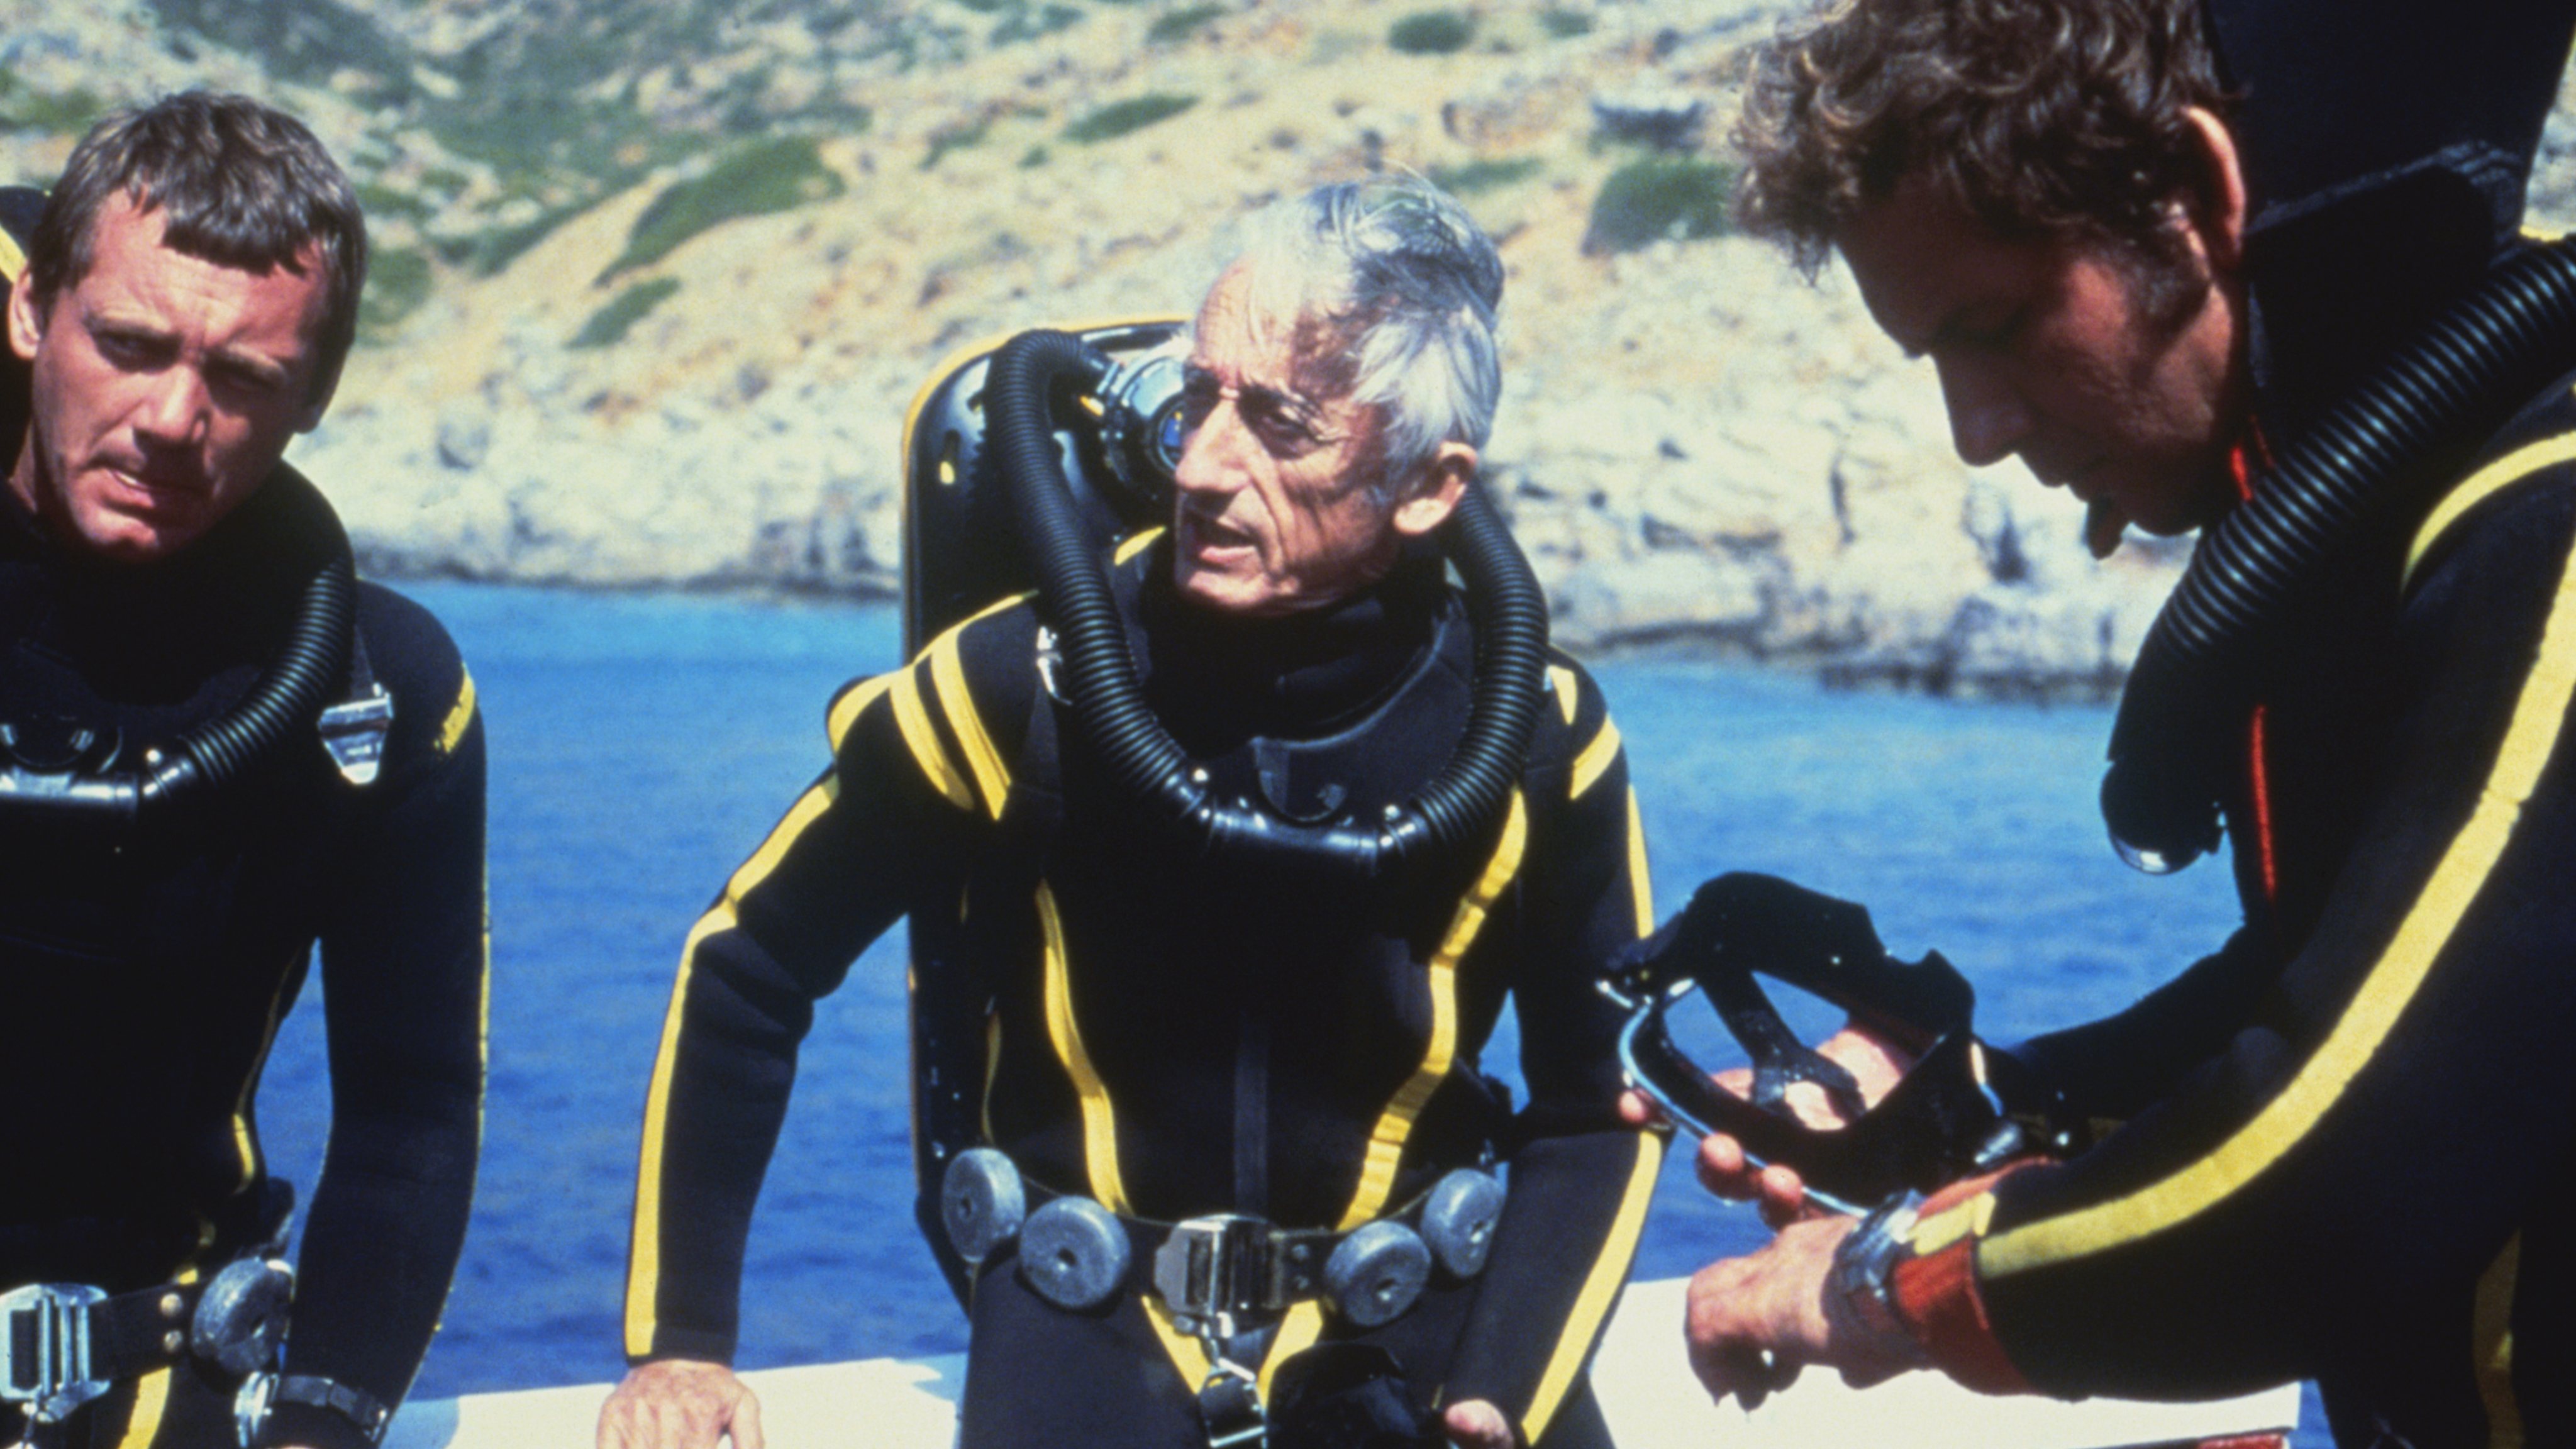 Jacques Cousteau Wearing Diving Gear